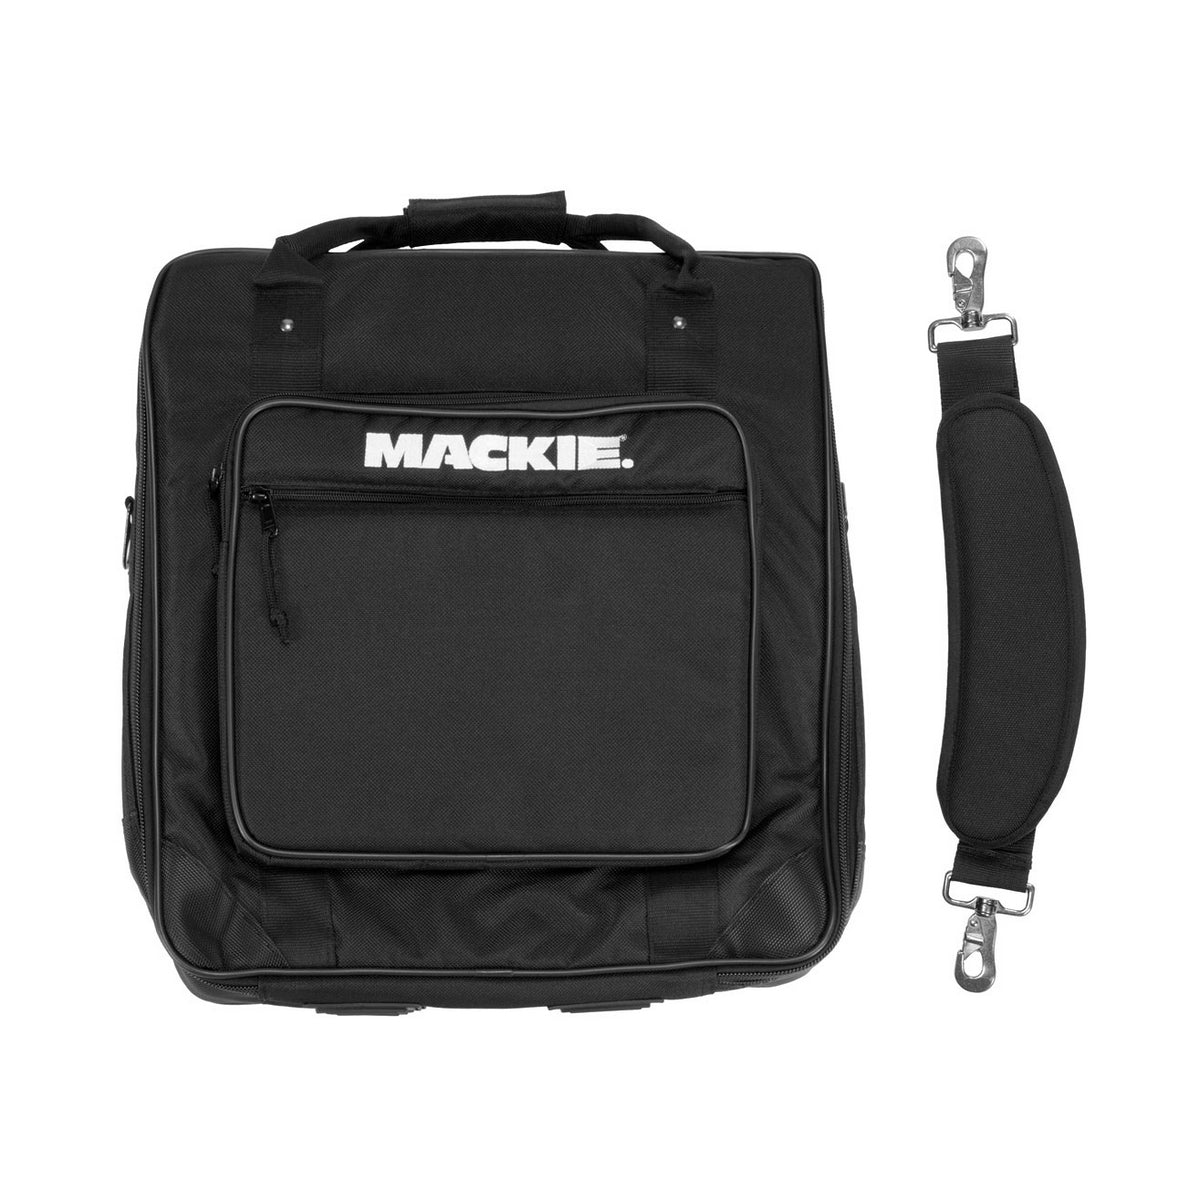 Mackie 1604VLZ Bag | Mixer Bag for 1604VLZ4 VLZ3 & VLZ Pro